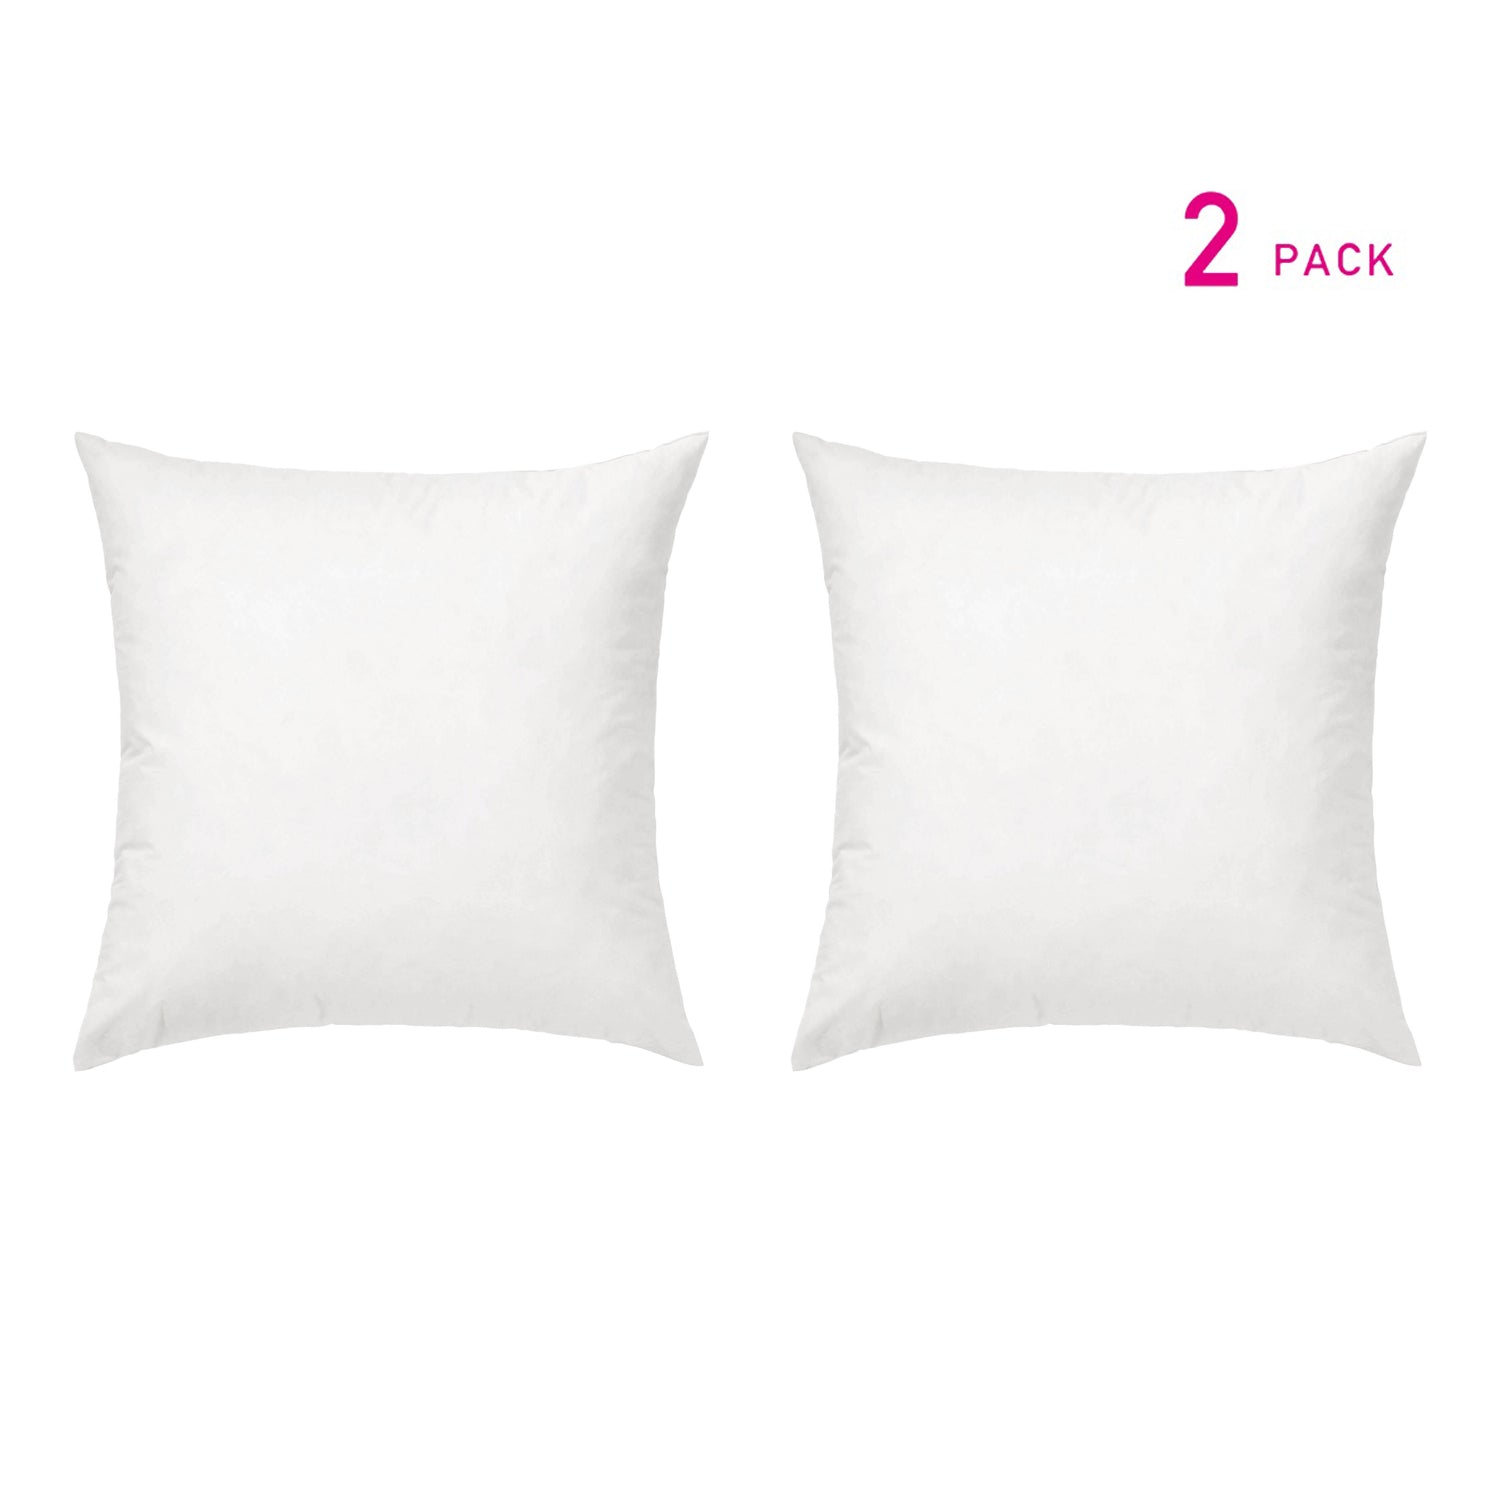 Pillow Insert 18x18 Inch Square Sham Stuffer Premium Hypoallergenic Pillow Forms